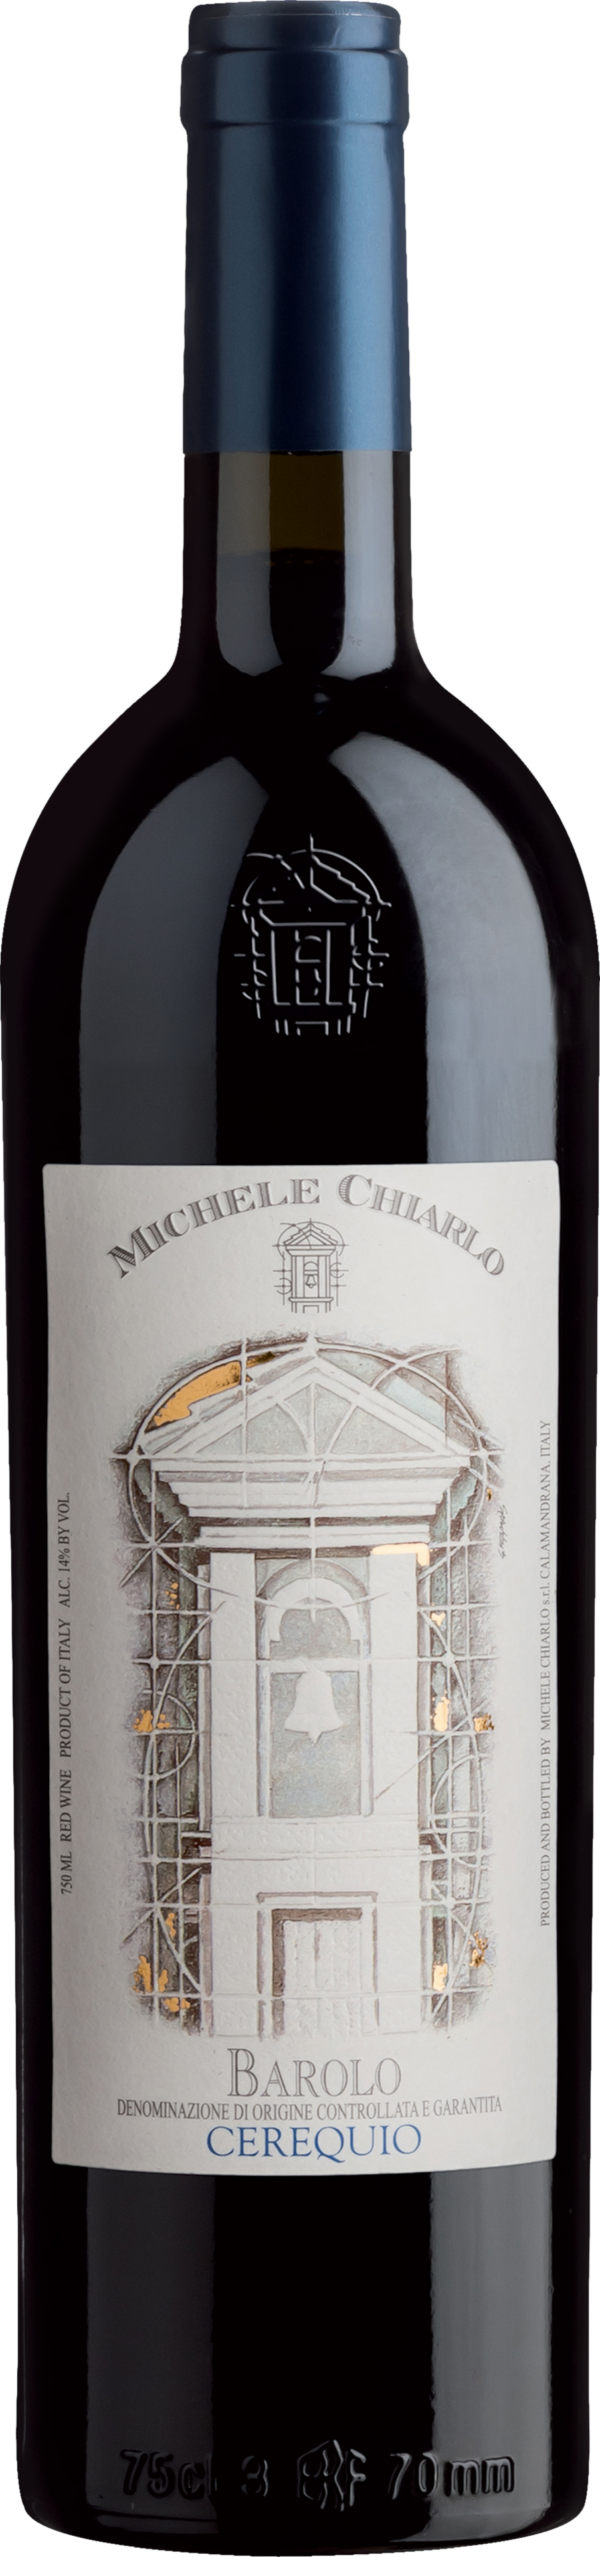 Product image of Michele Chiarlo Barolo Cerequio 2017 from 8wines